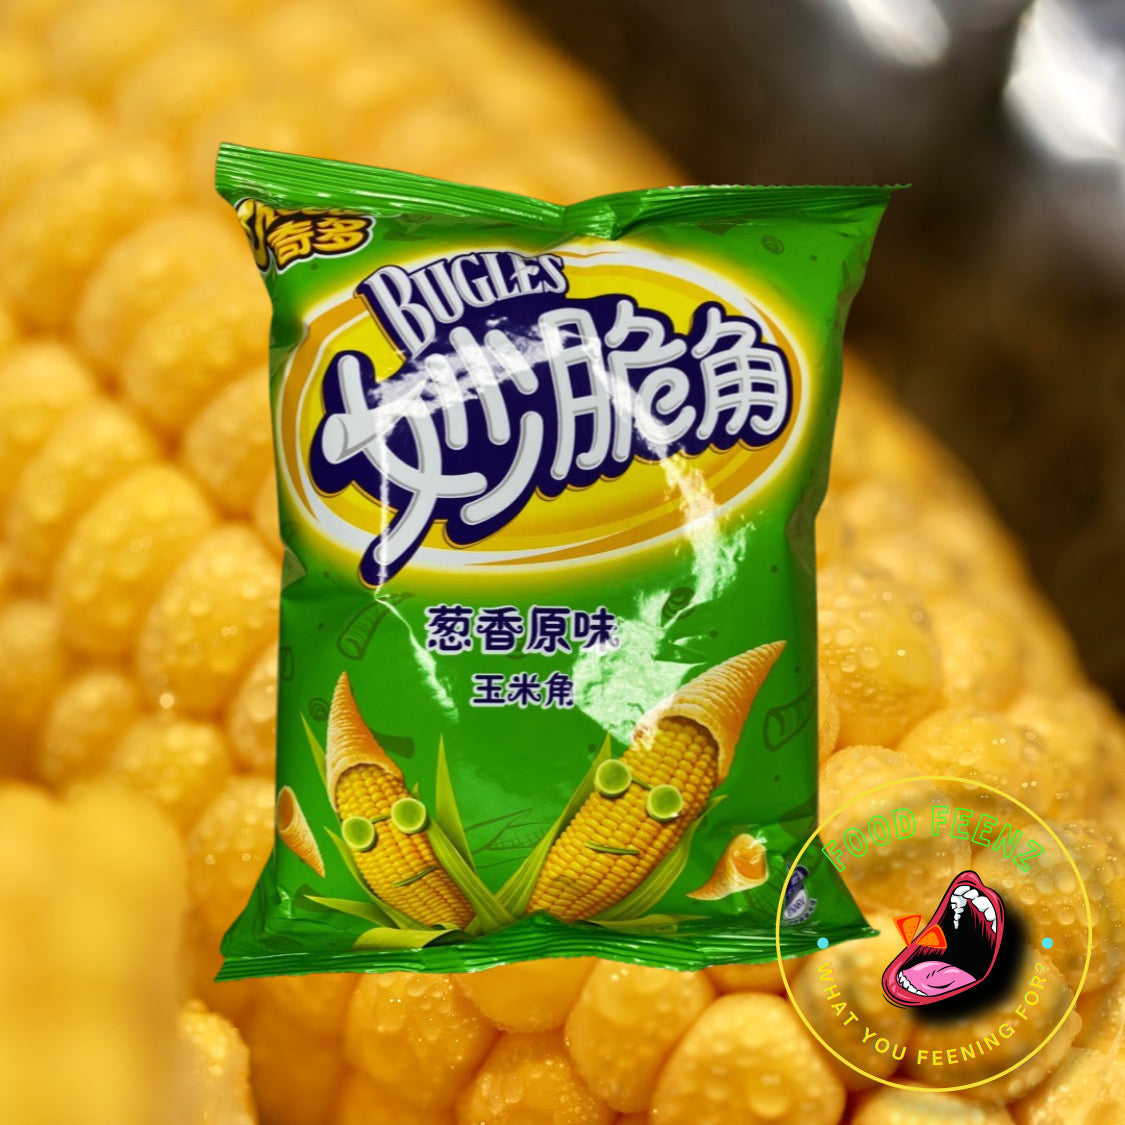 Cheetos Bugles Corn Crisp Onion Flavor (China)